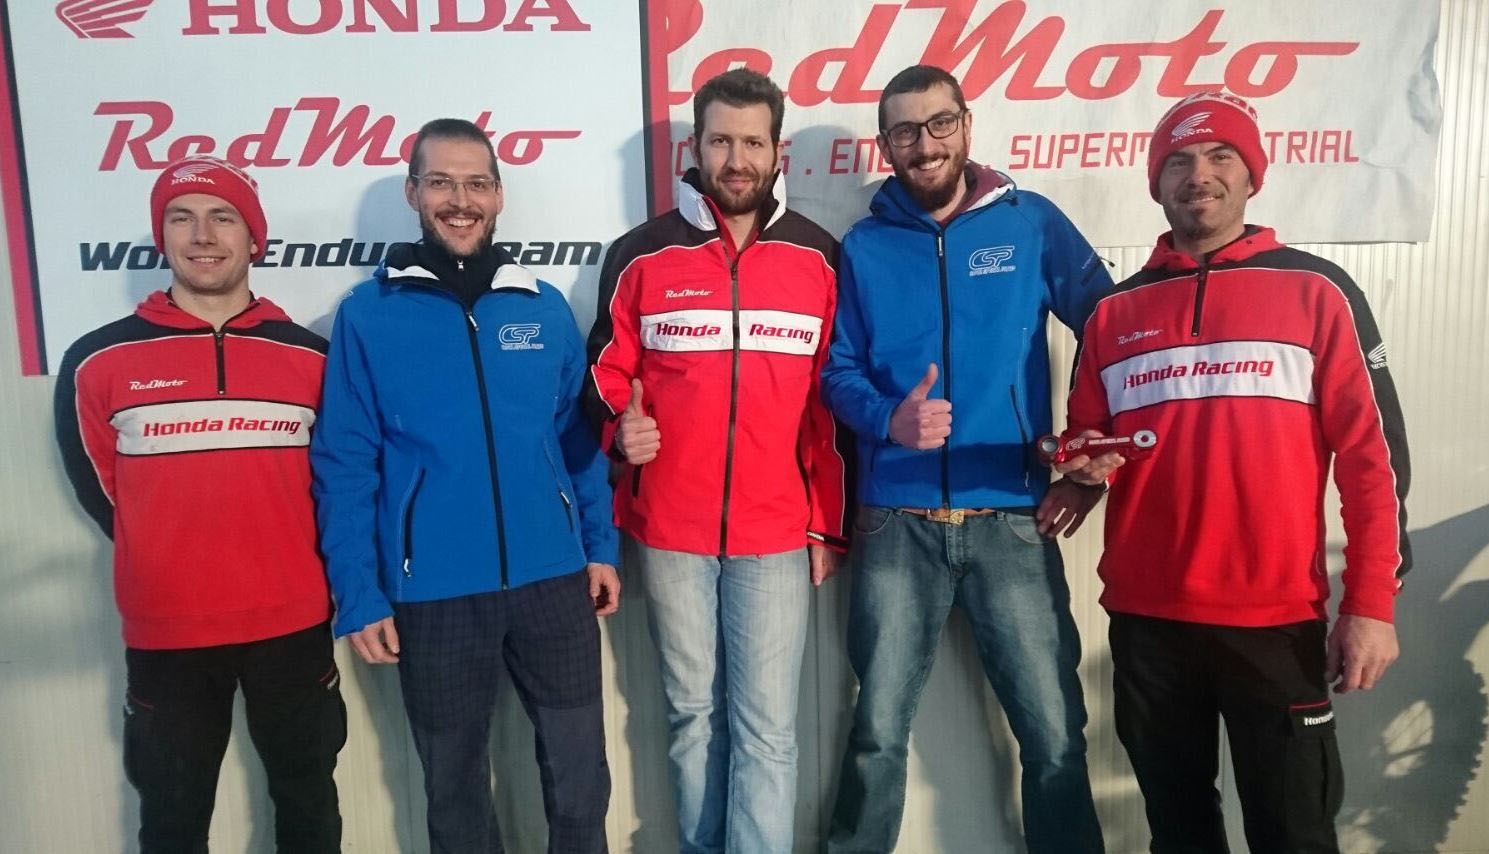 Honda RedMoto World Enduro Team